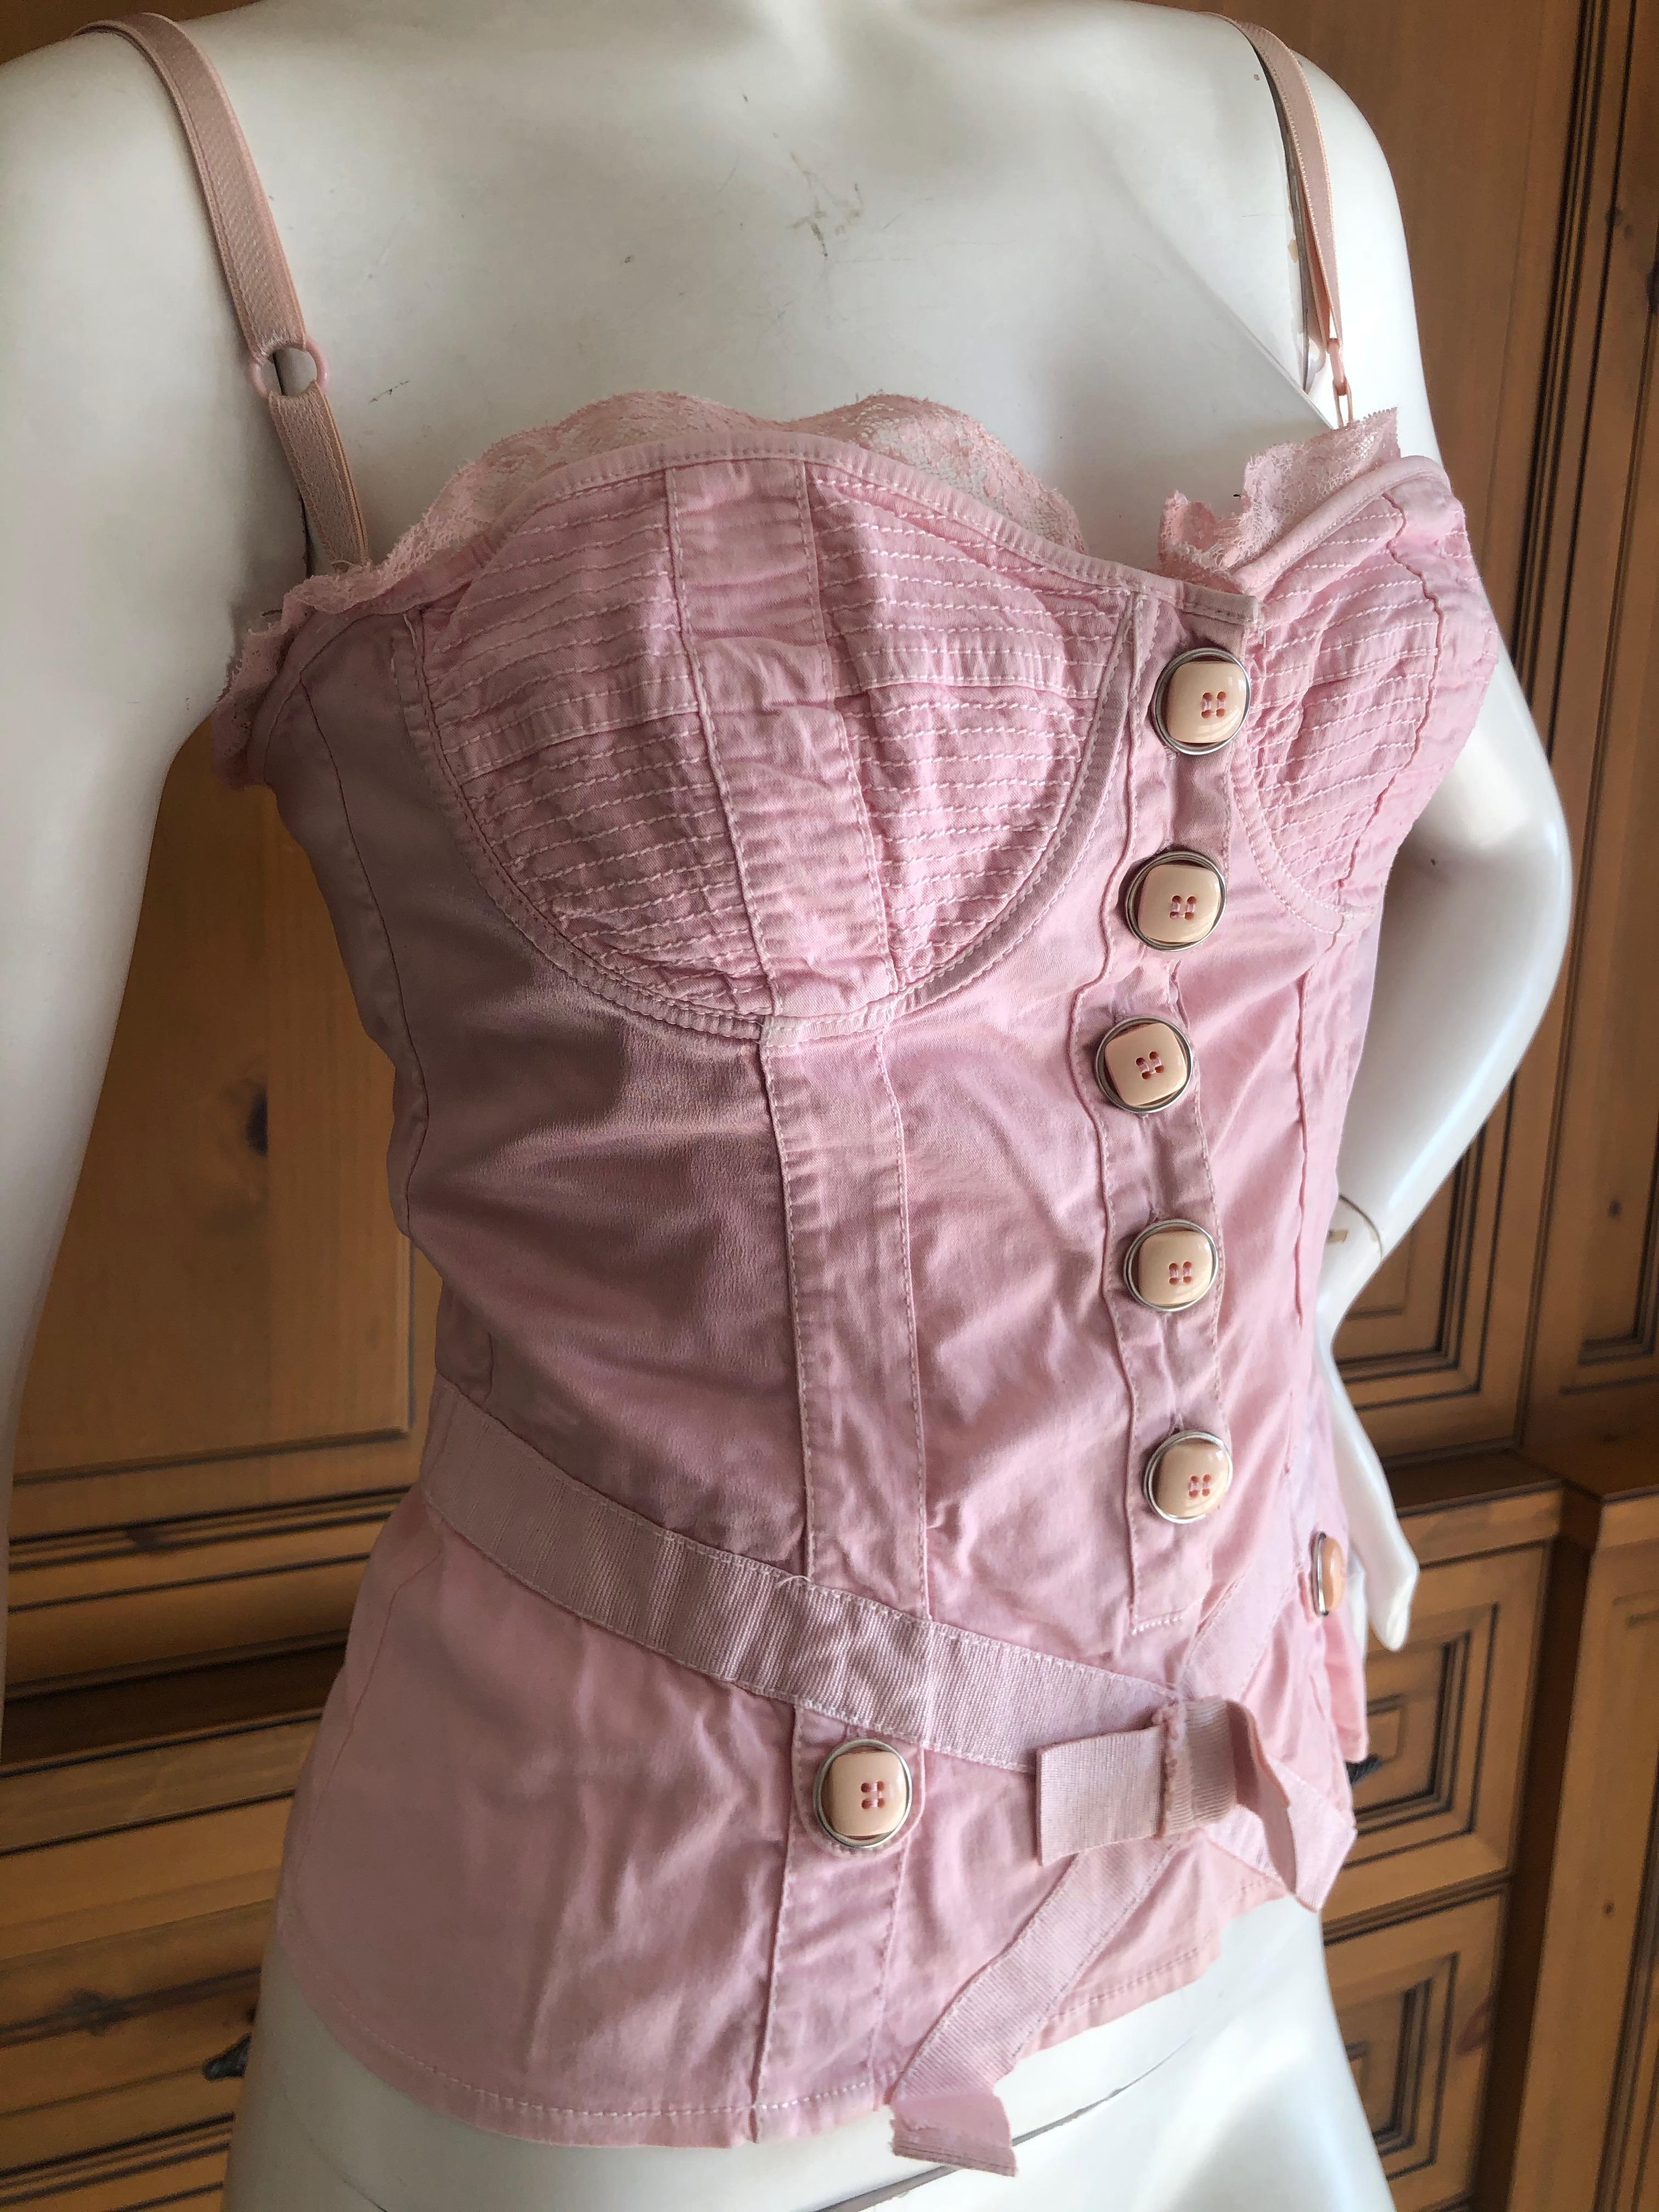 dolce and gabbana pink corset